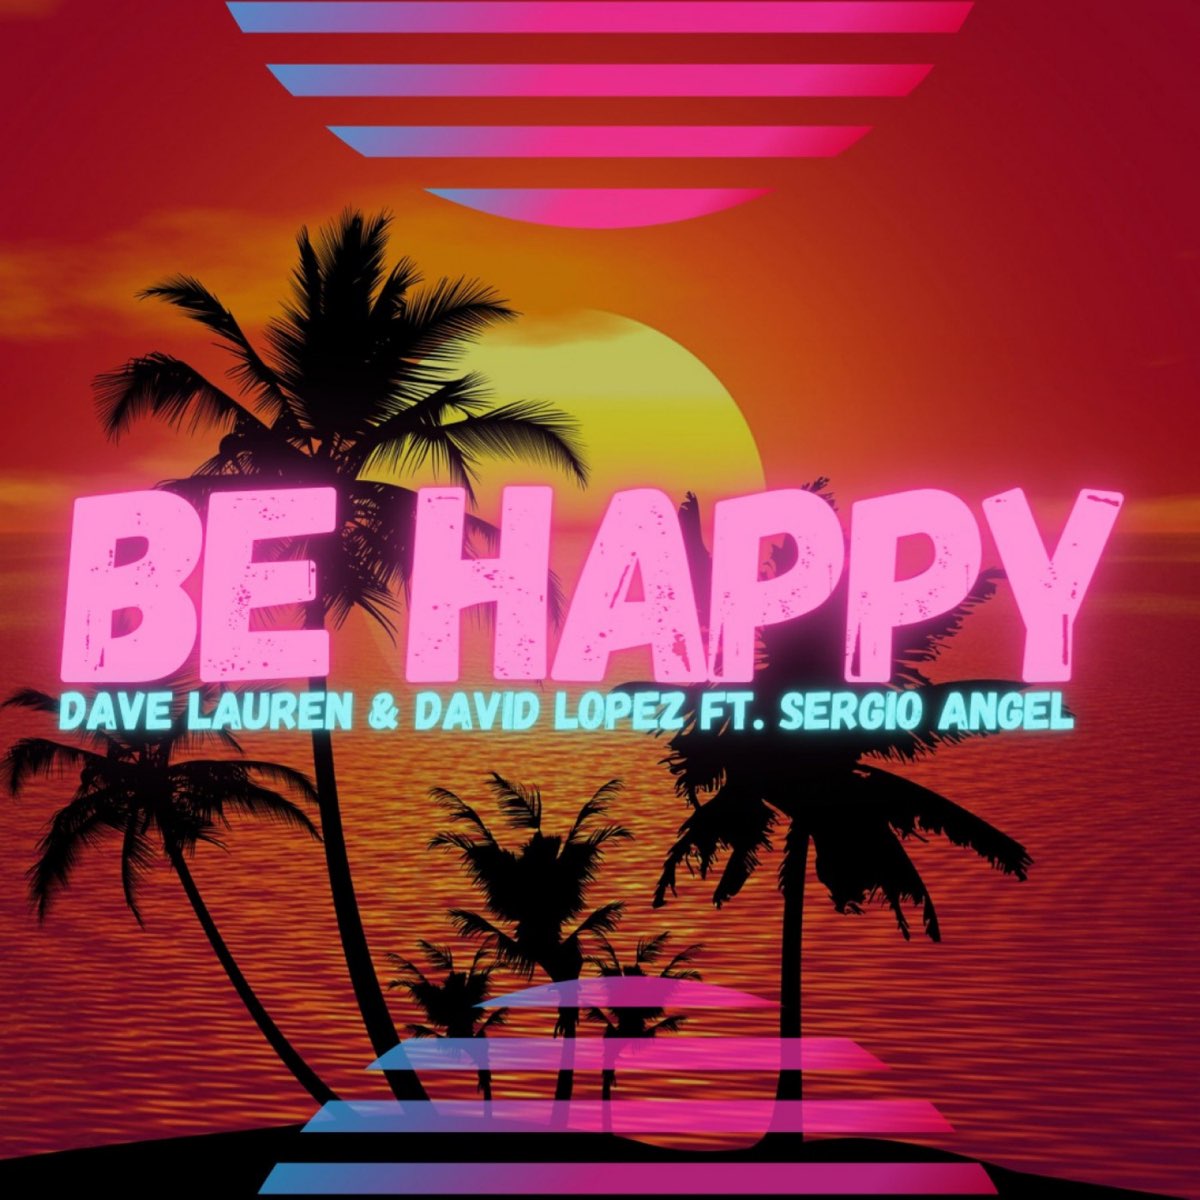 David Lopez. Laure Dave. DJ chick, Dave Lauren - smoking Weed (Original Mix). Be happy remix